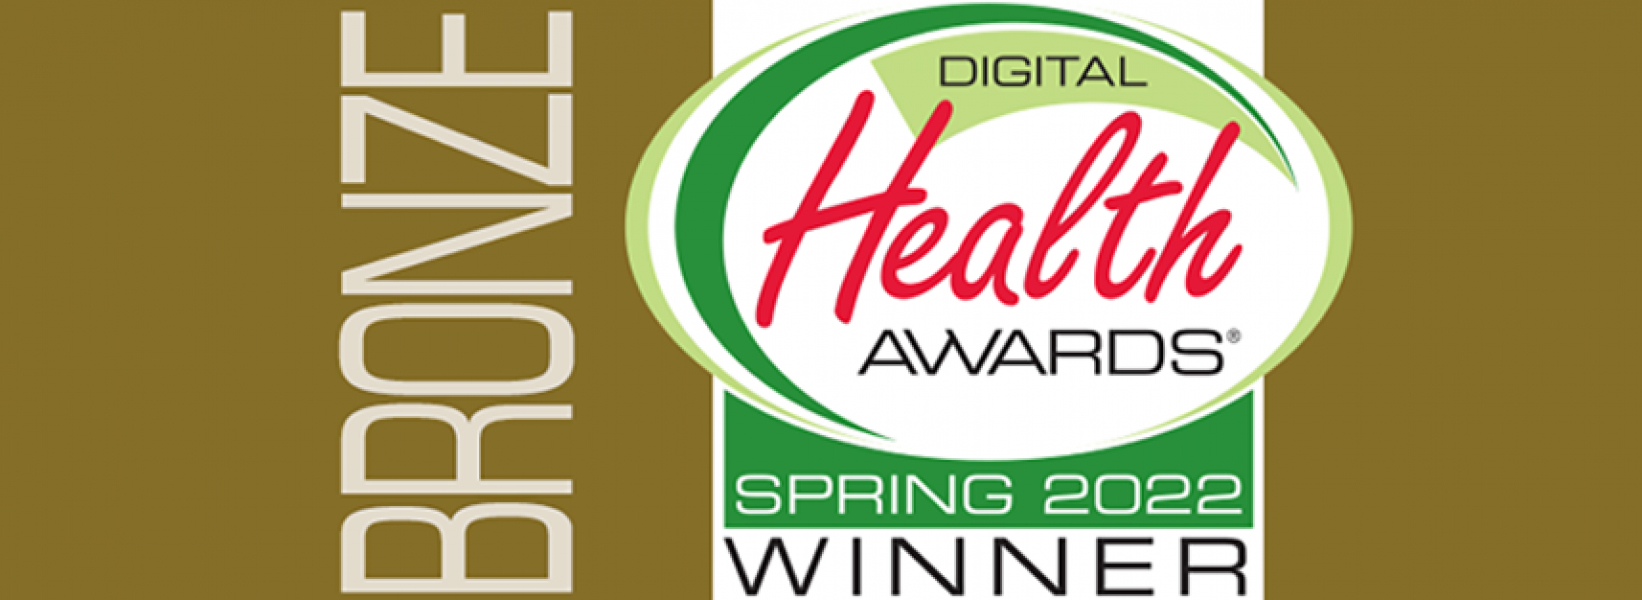 Huddle Health is a Digital Health Awards winner for 2022